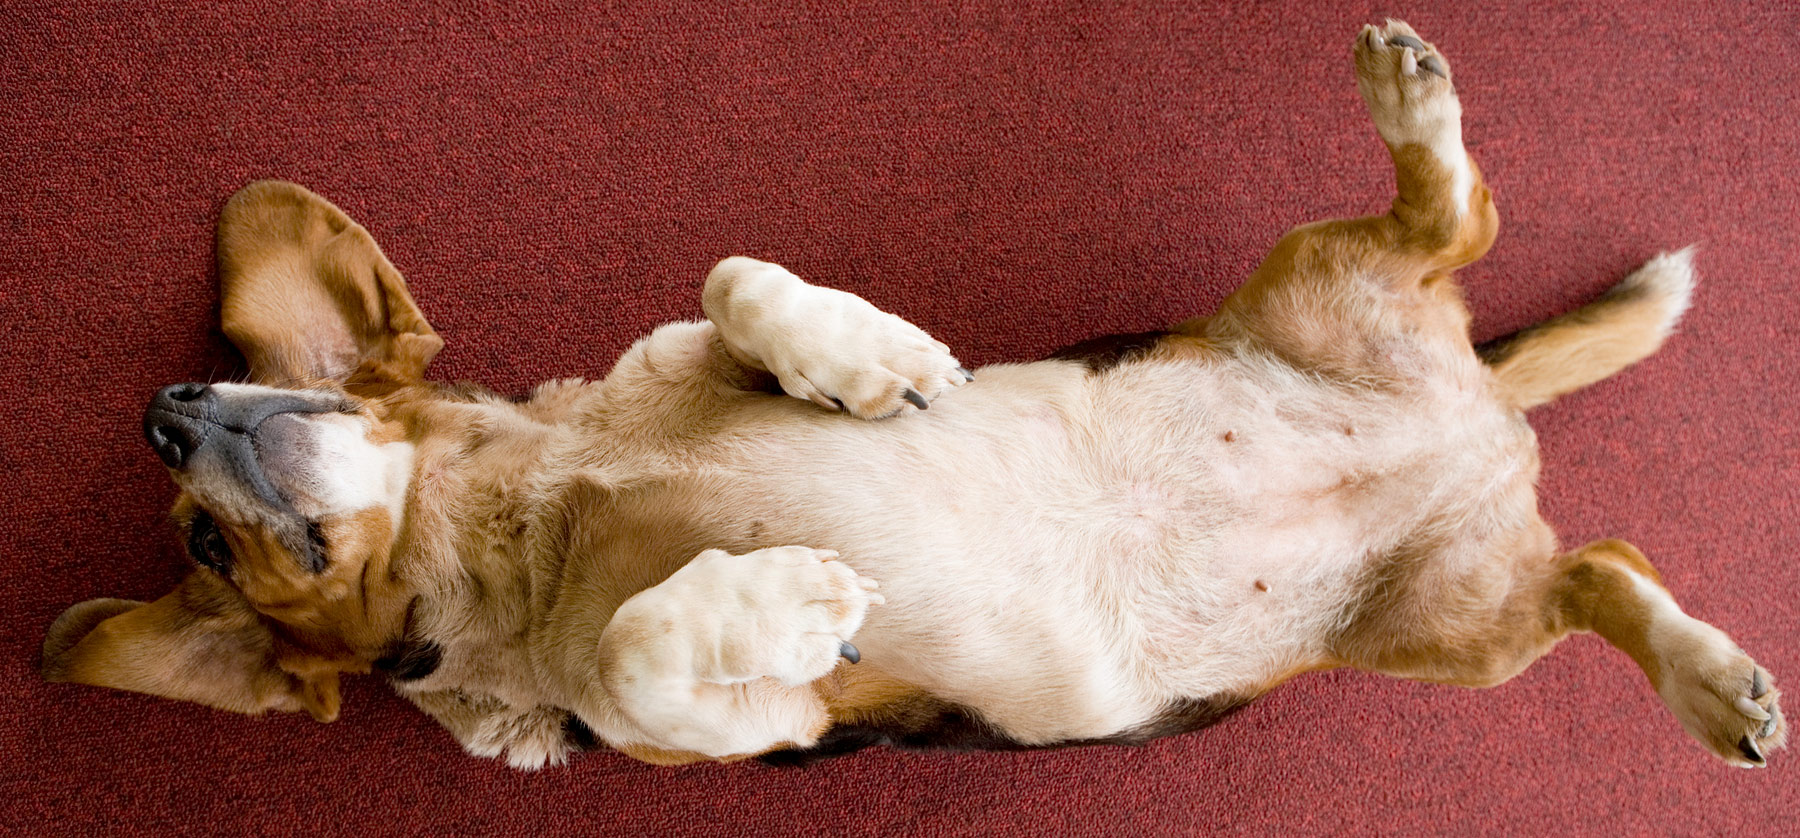 Dog lying on back - vulnerable